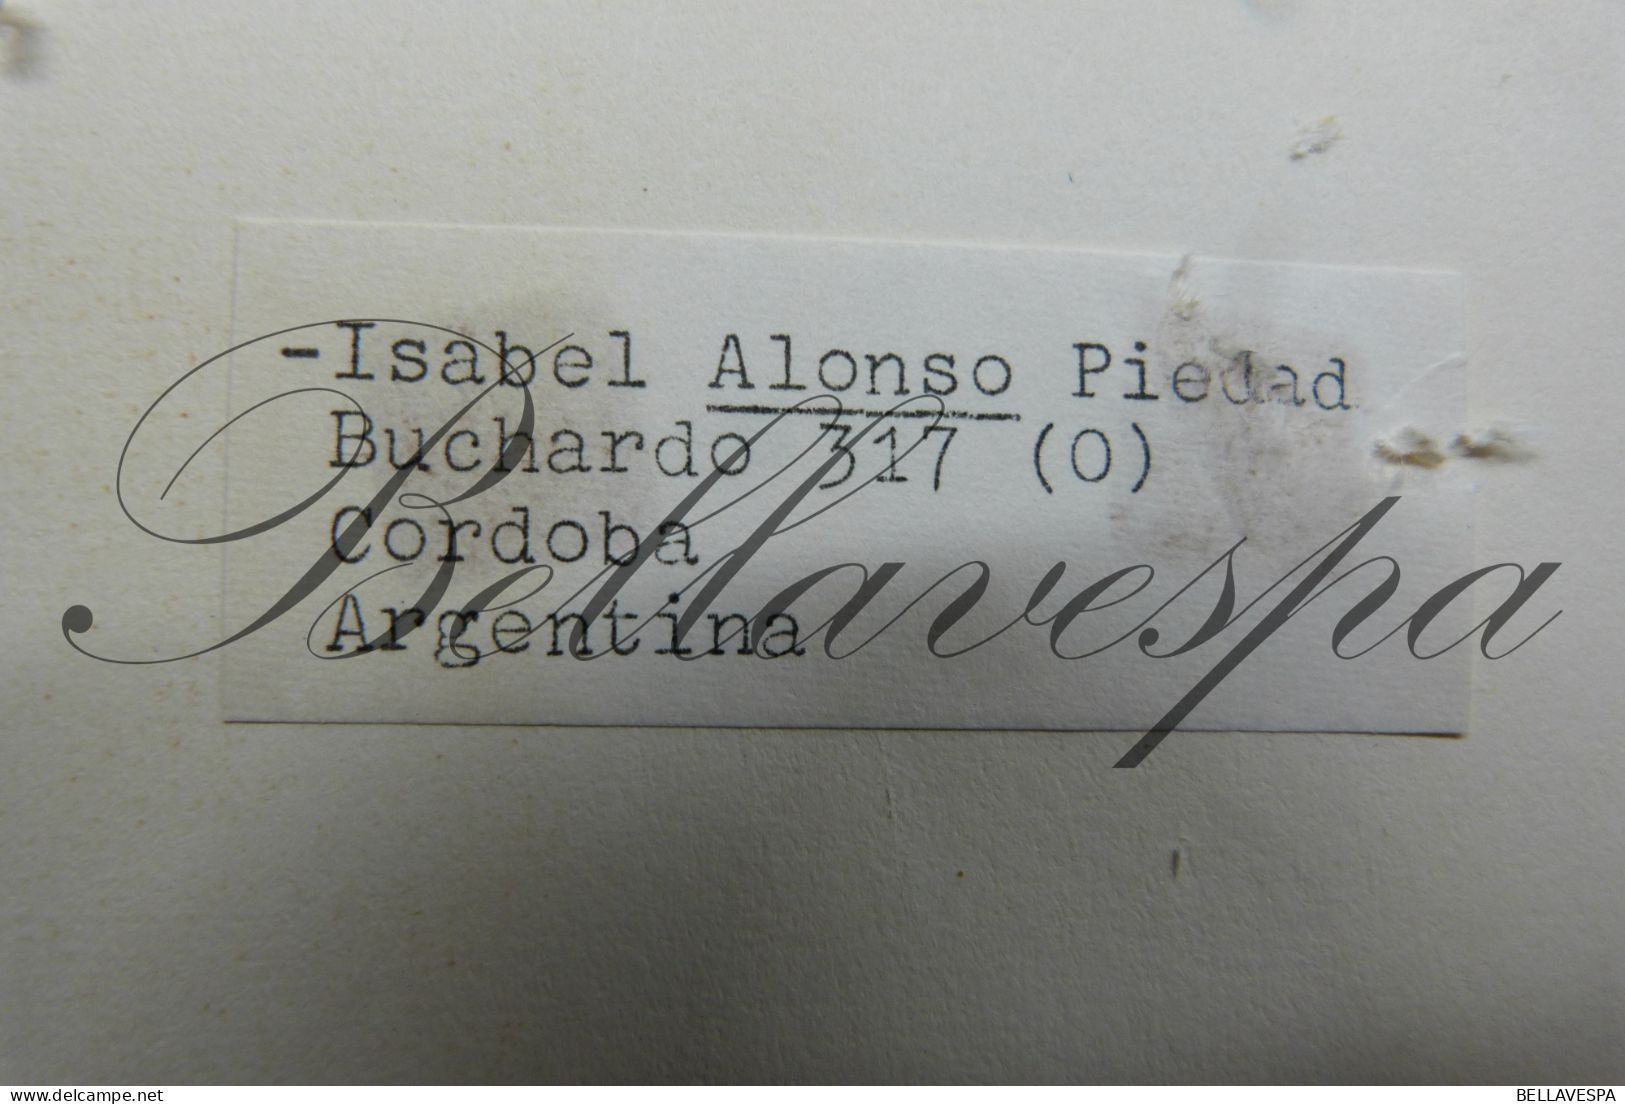 Isabel ALONSO PIEDAD Cordoba Argentina Buchardo 317.Healt Development Research Amst. Leiden Antw 1971-72 - Genealogy